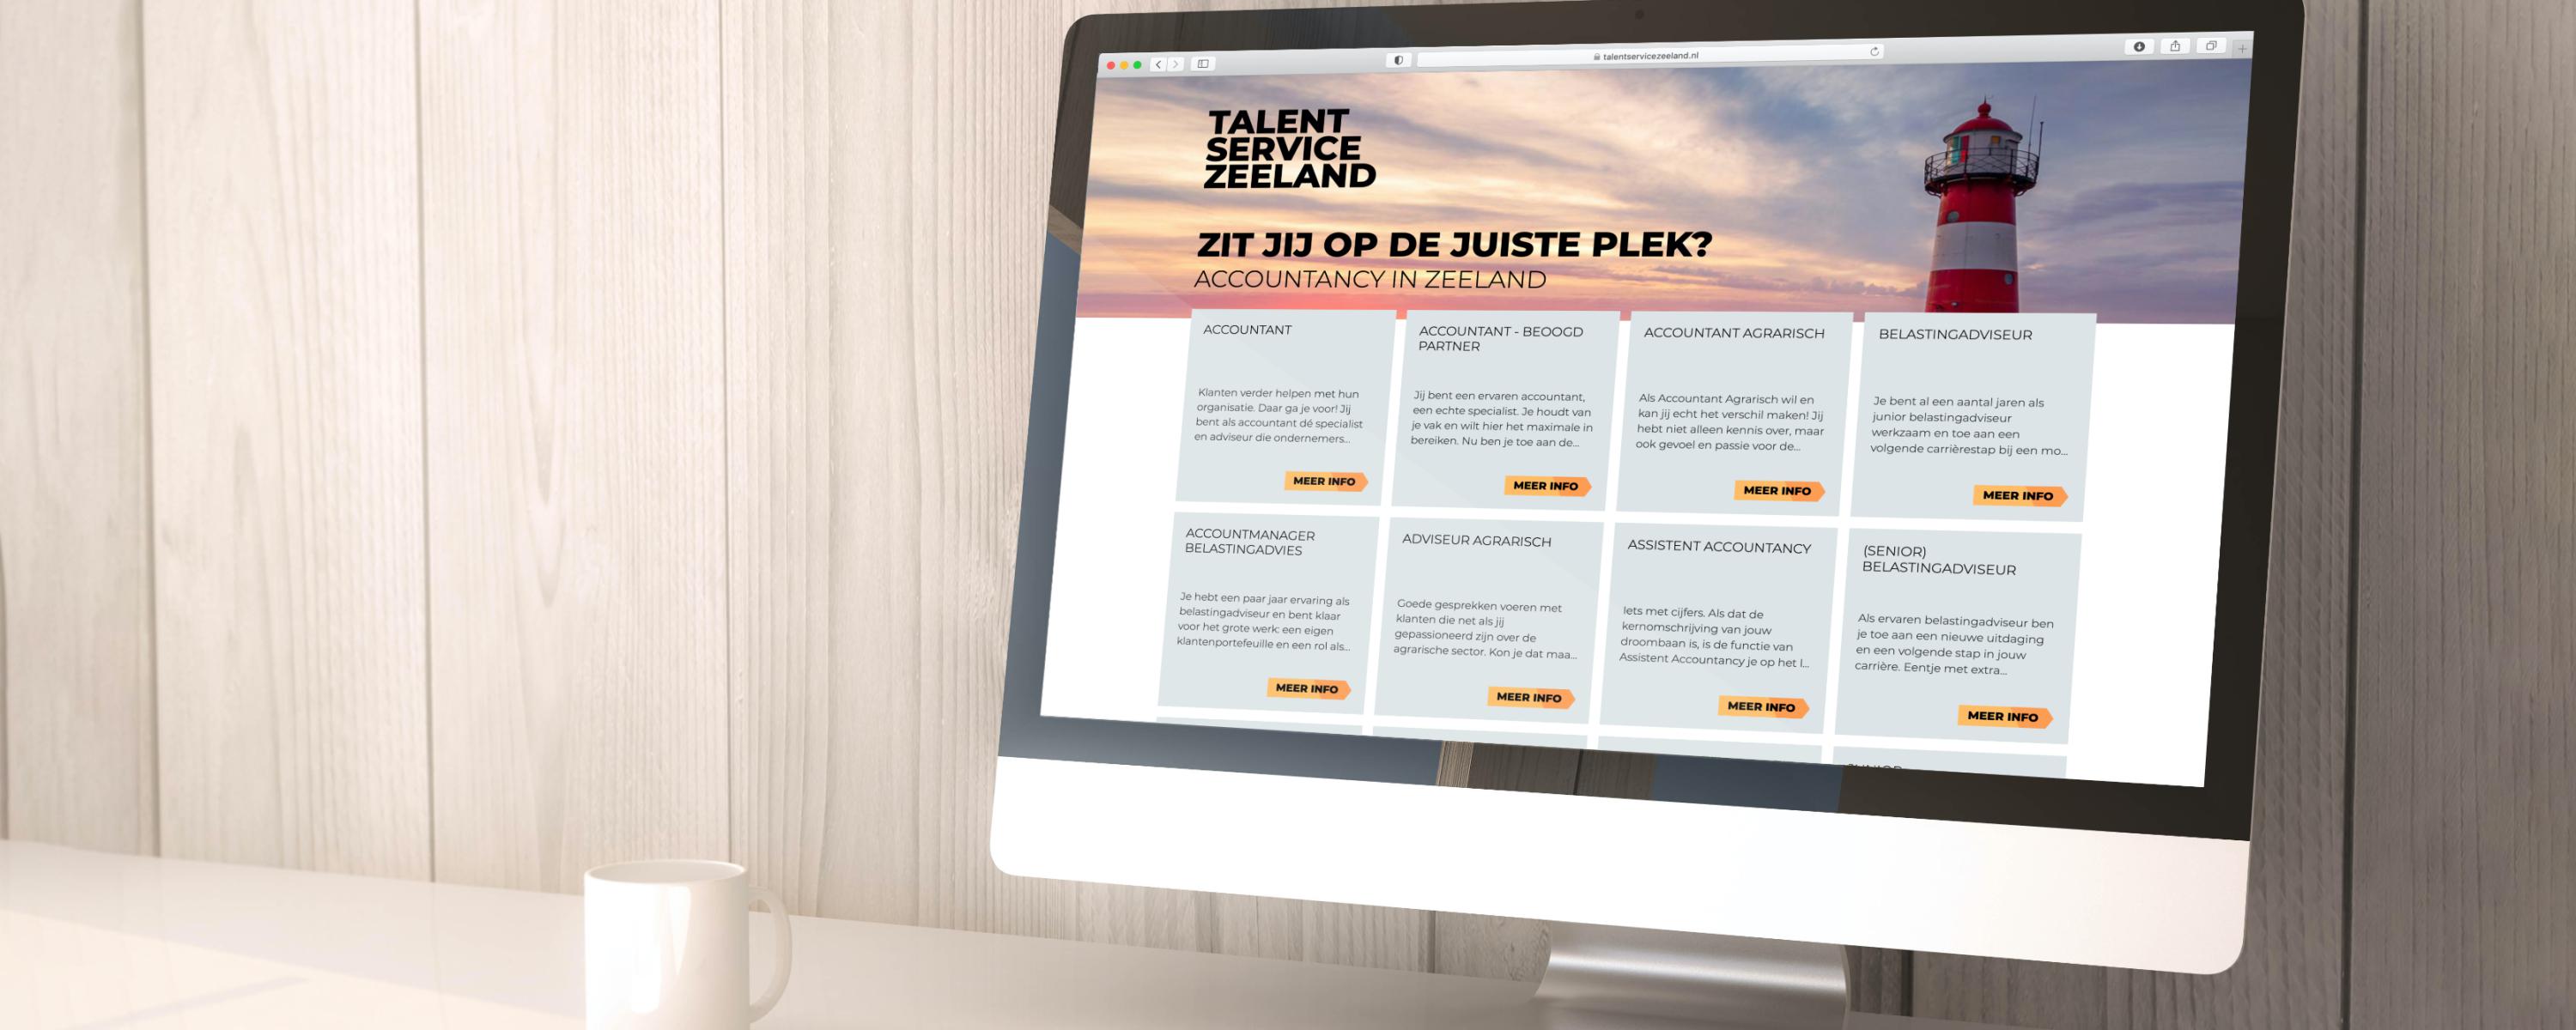 Talent Service Zeeland